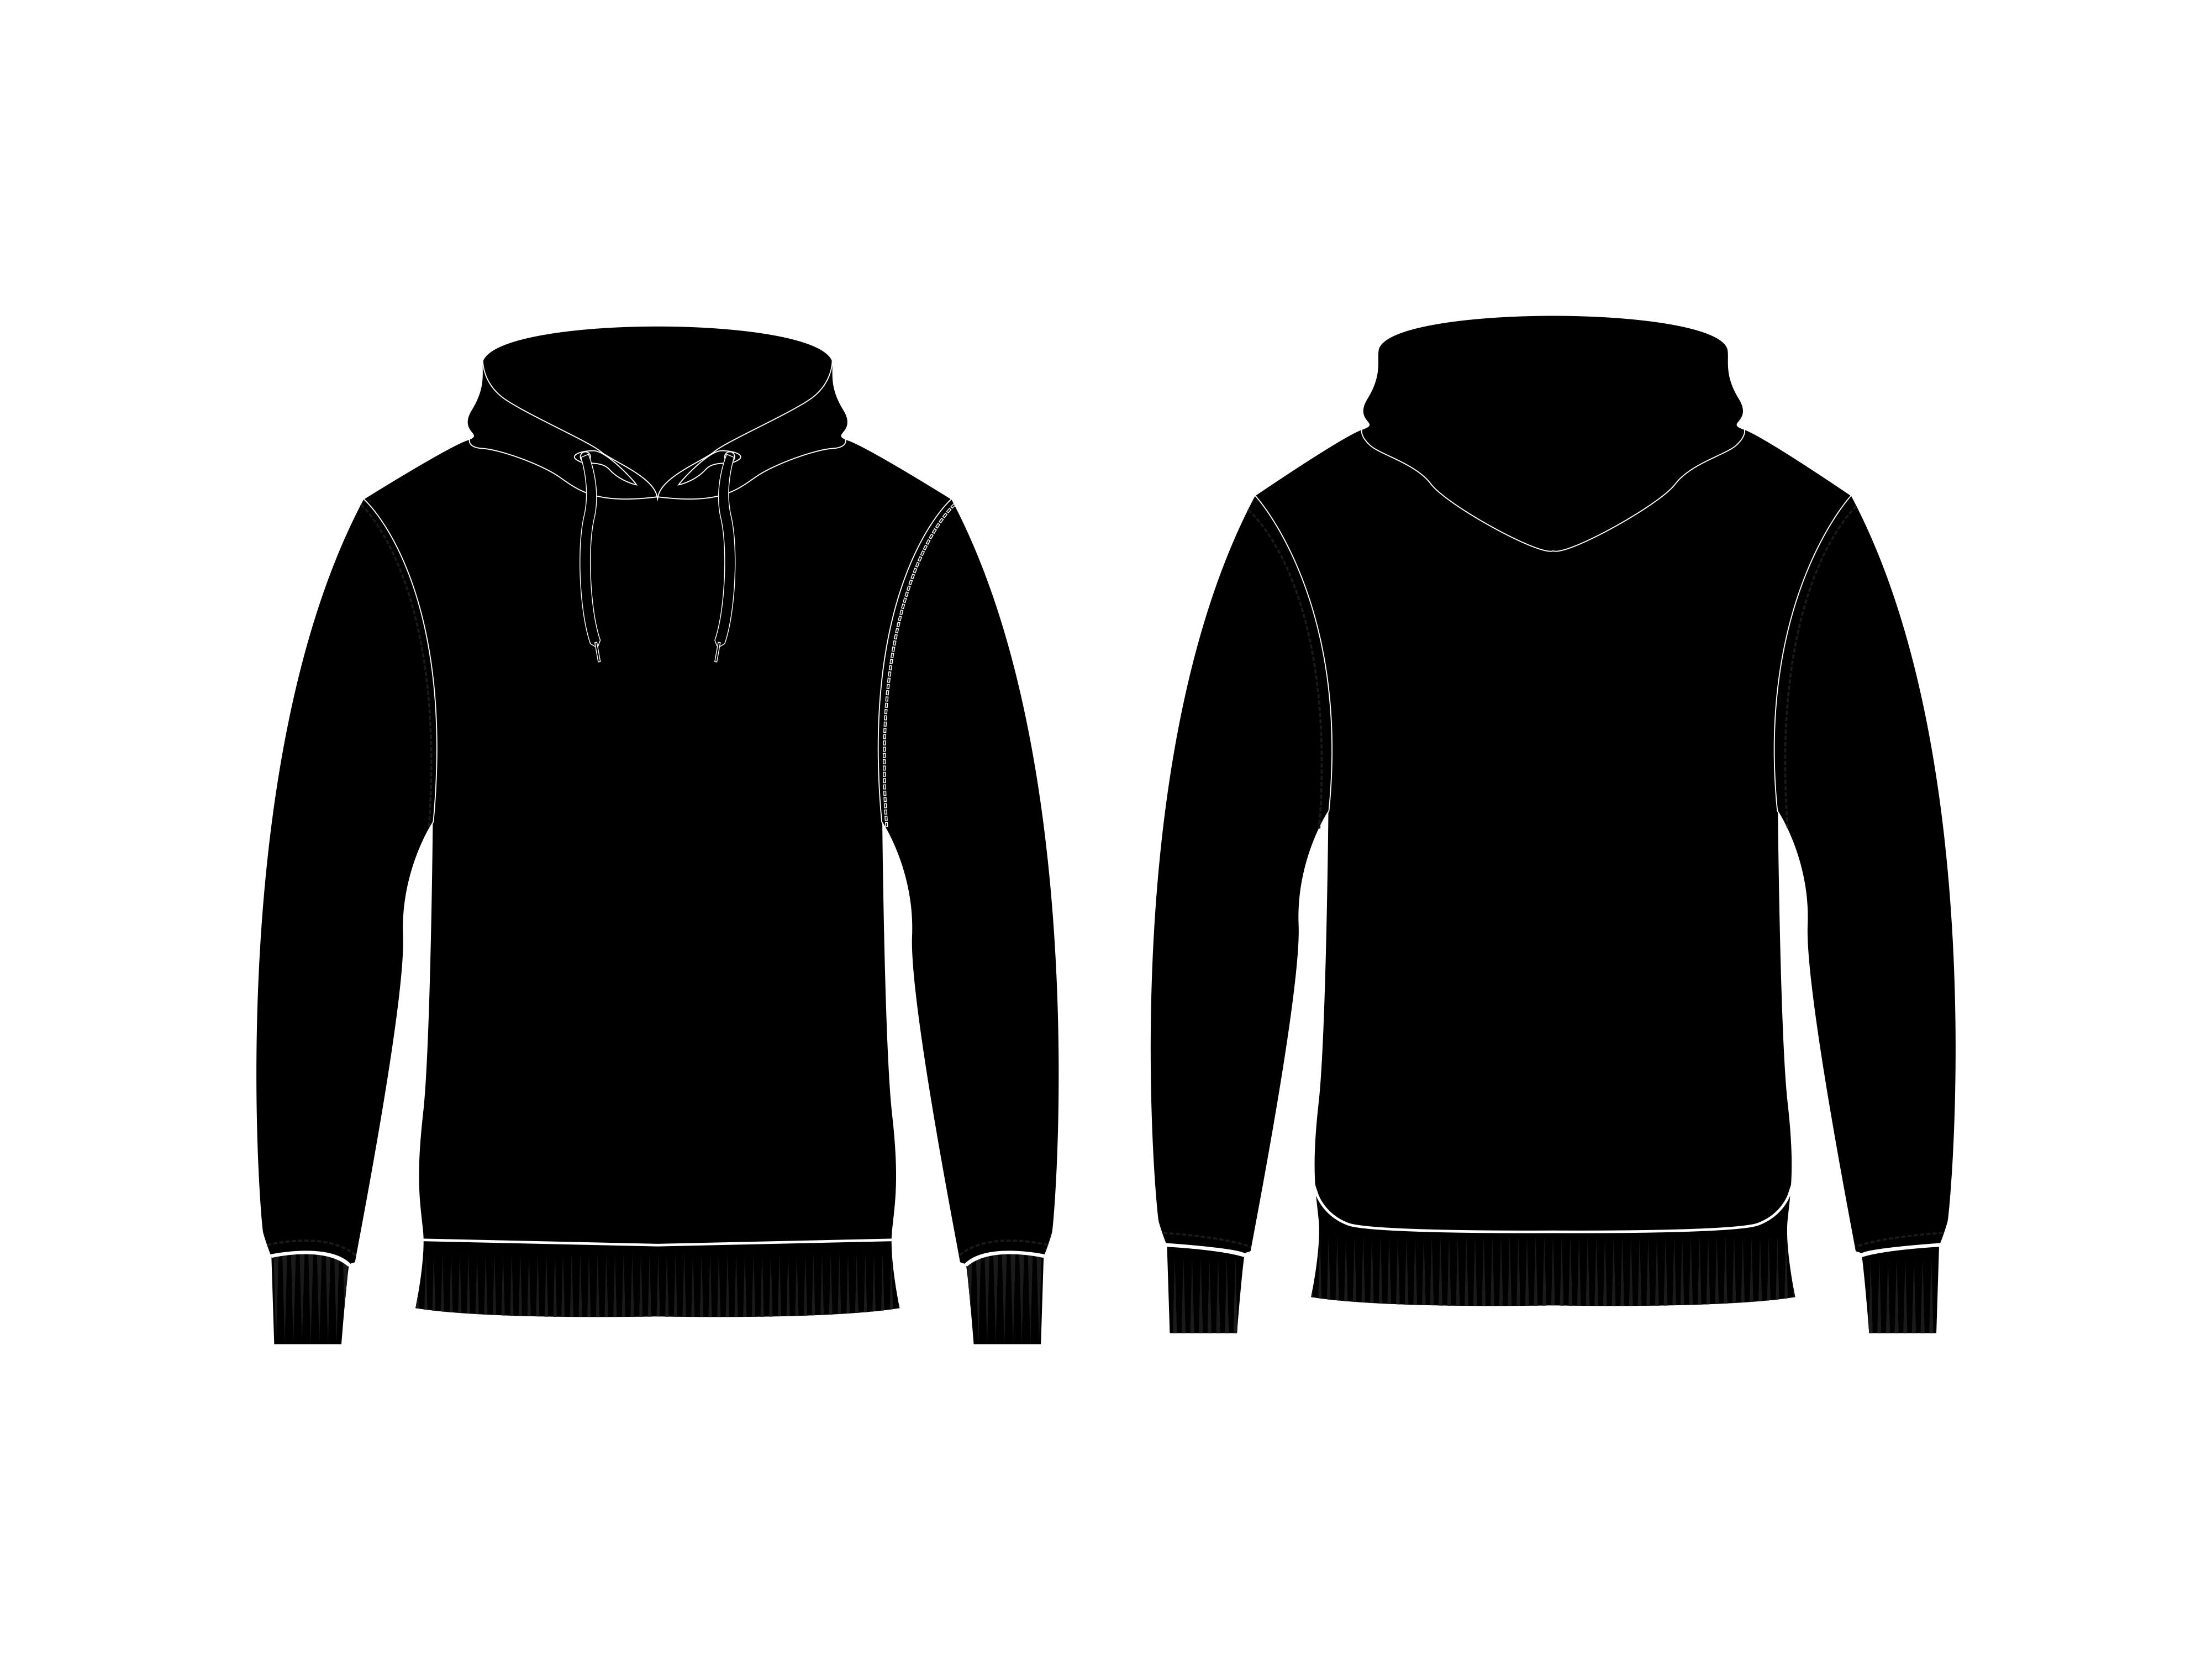 Hoodie Sweatshirt Black Front and Back Graphic by Idrdesign · Creative ...